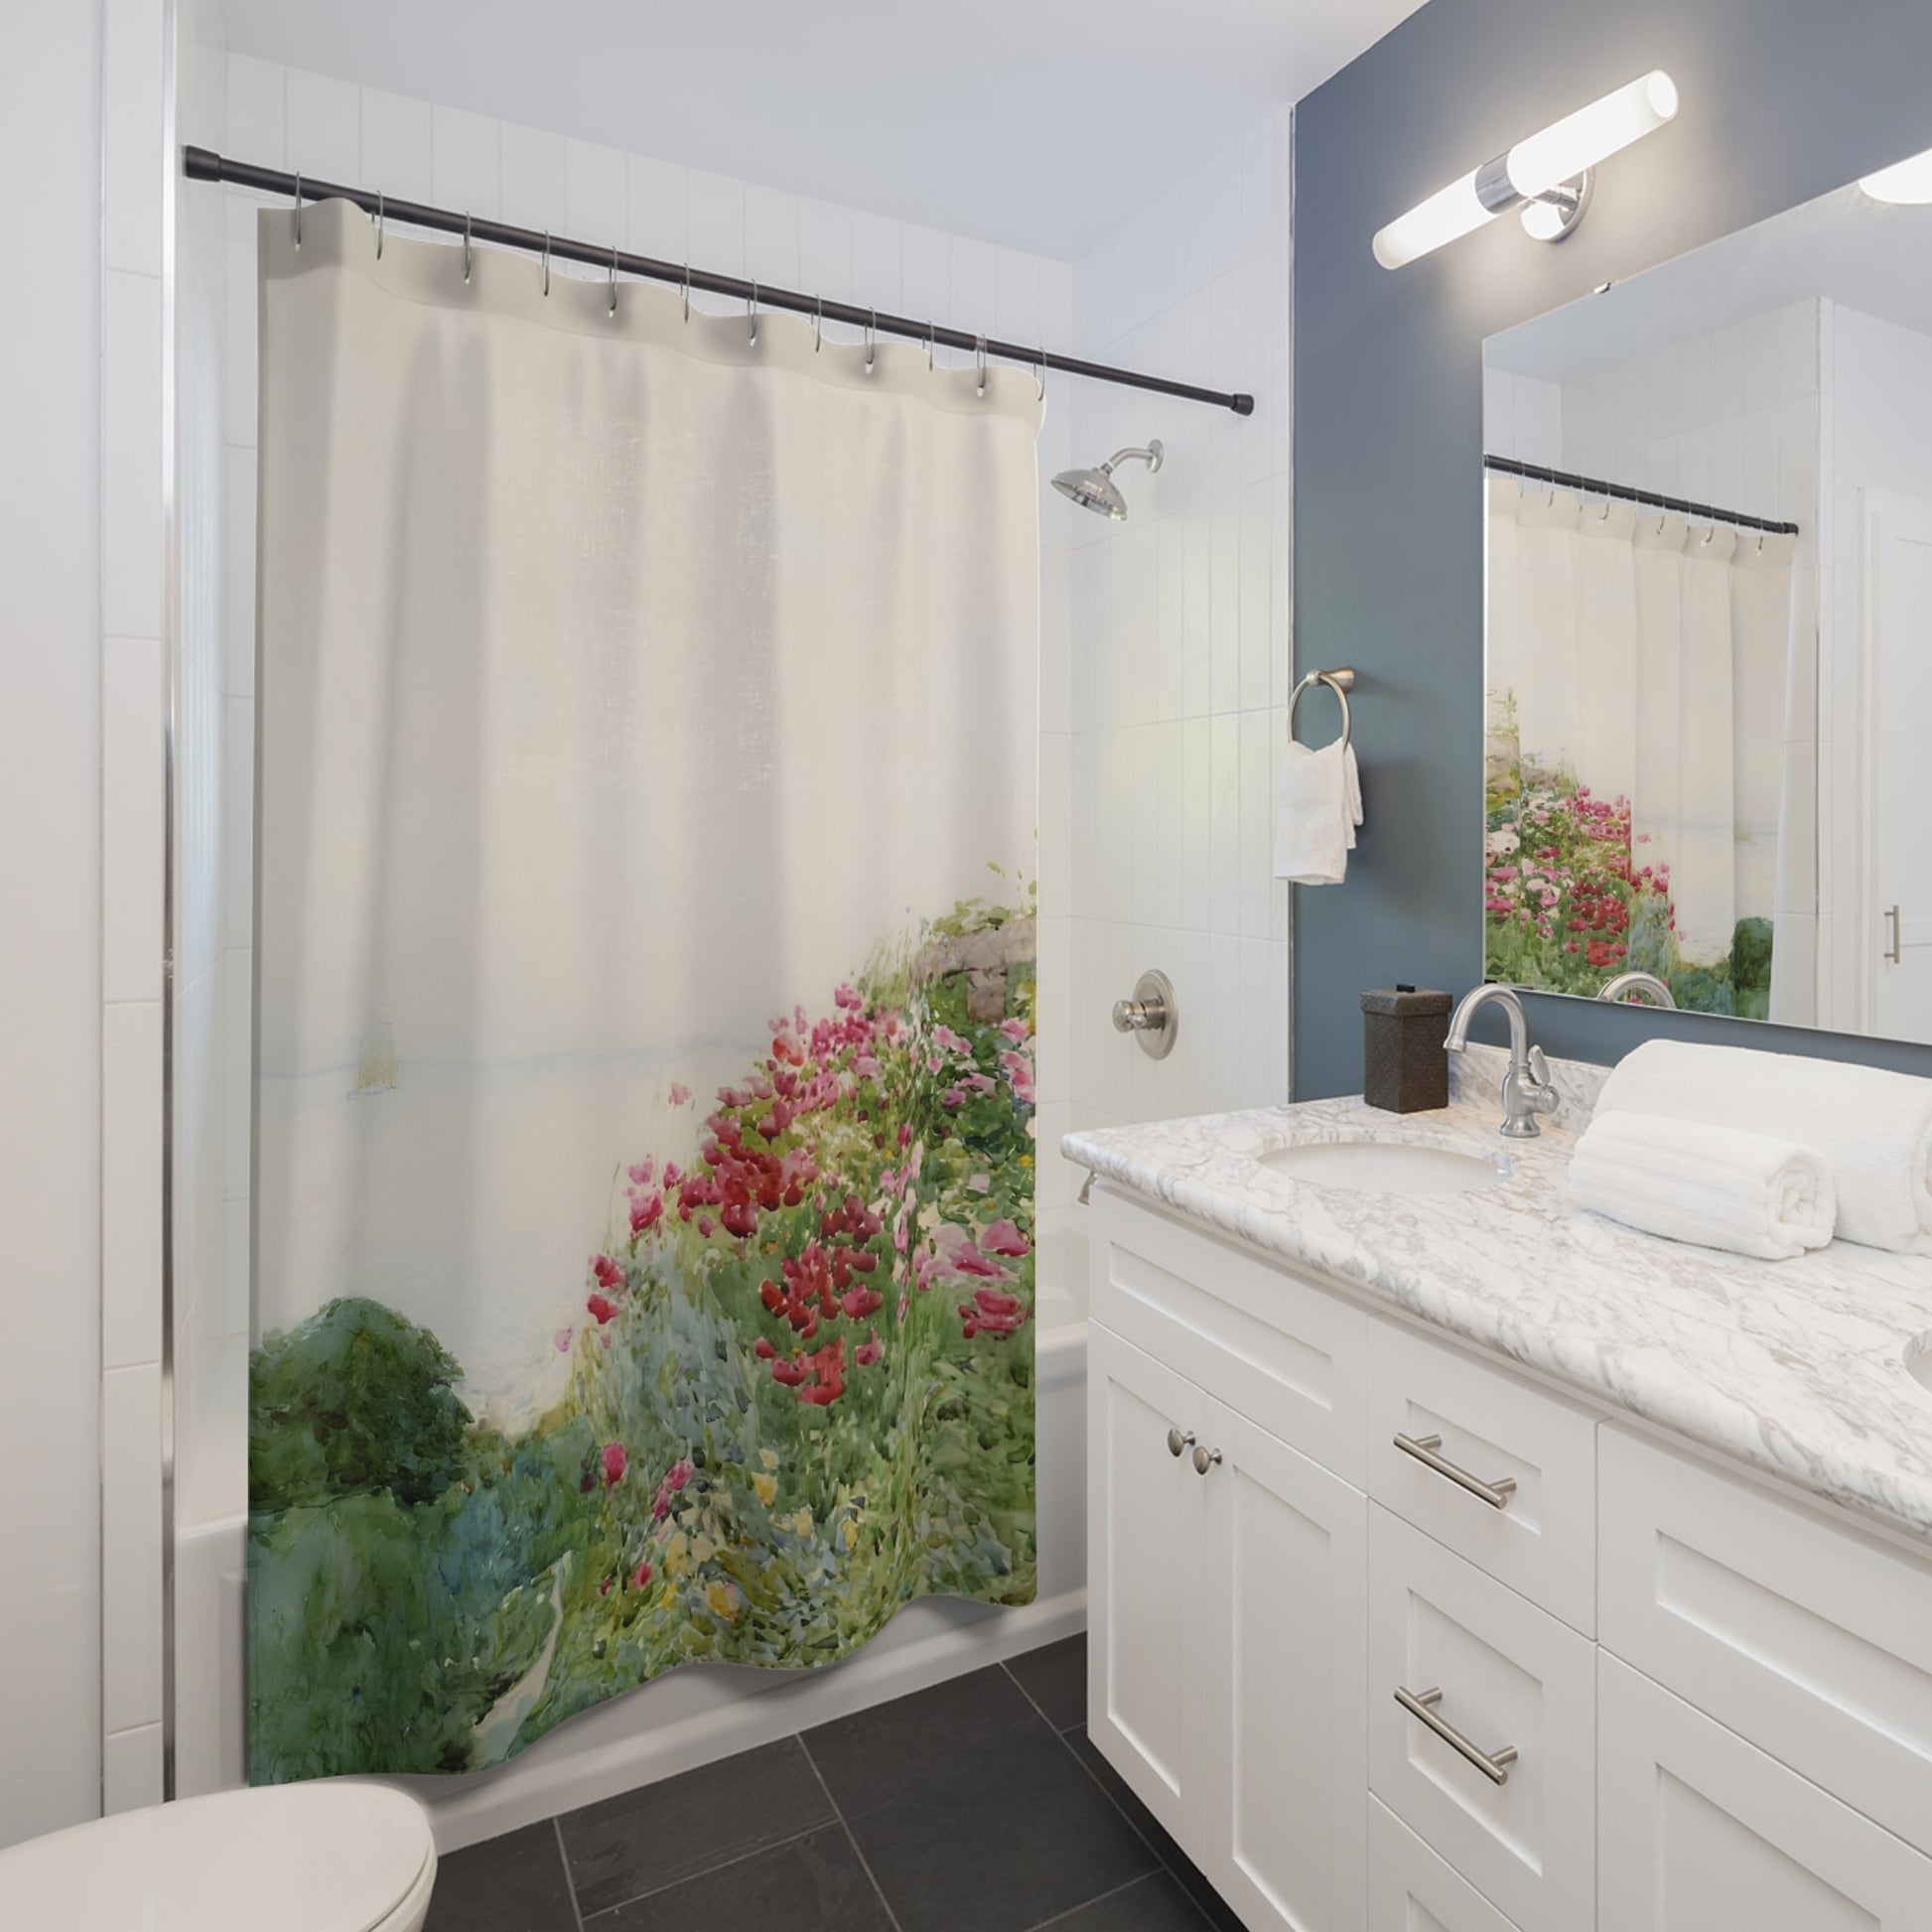 Poppy Shower Curtain Best Bathroom Decorating Ideas for Flowers Decor